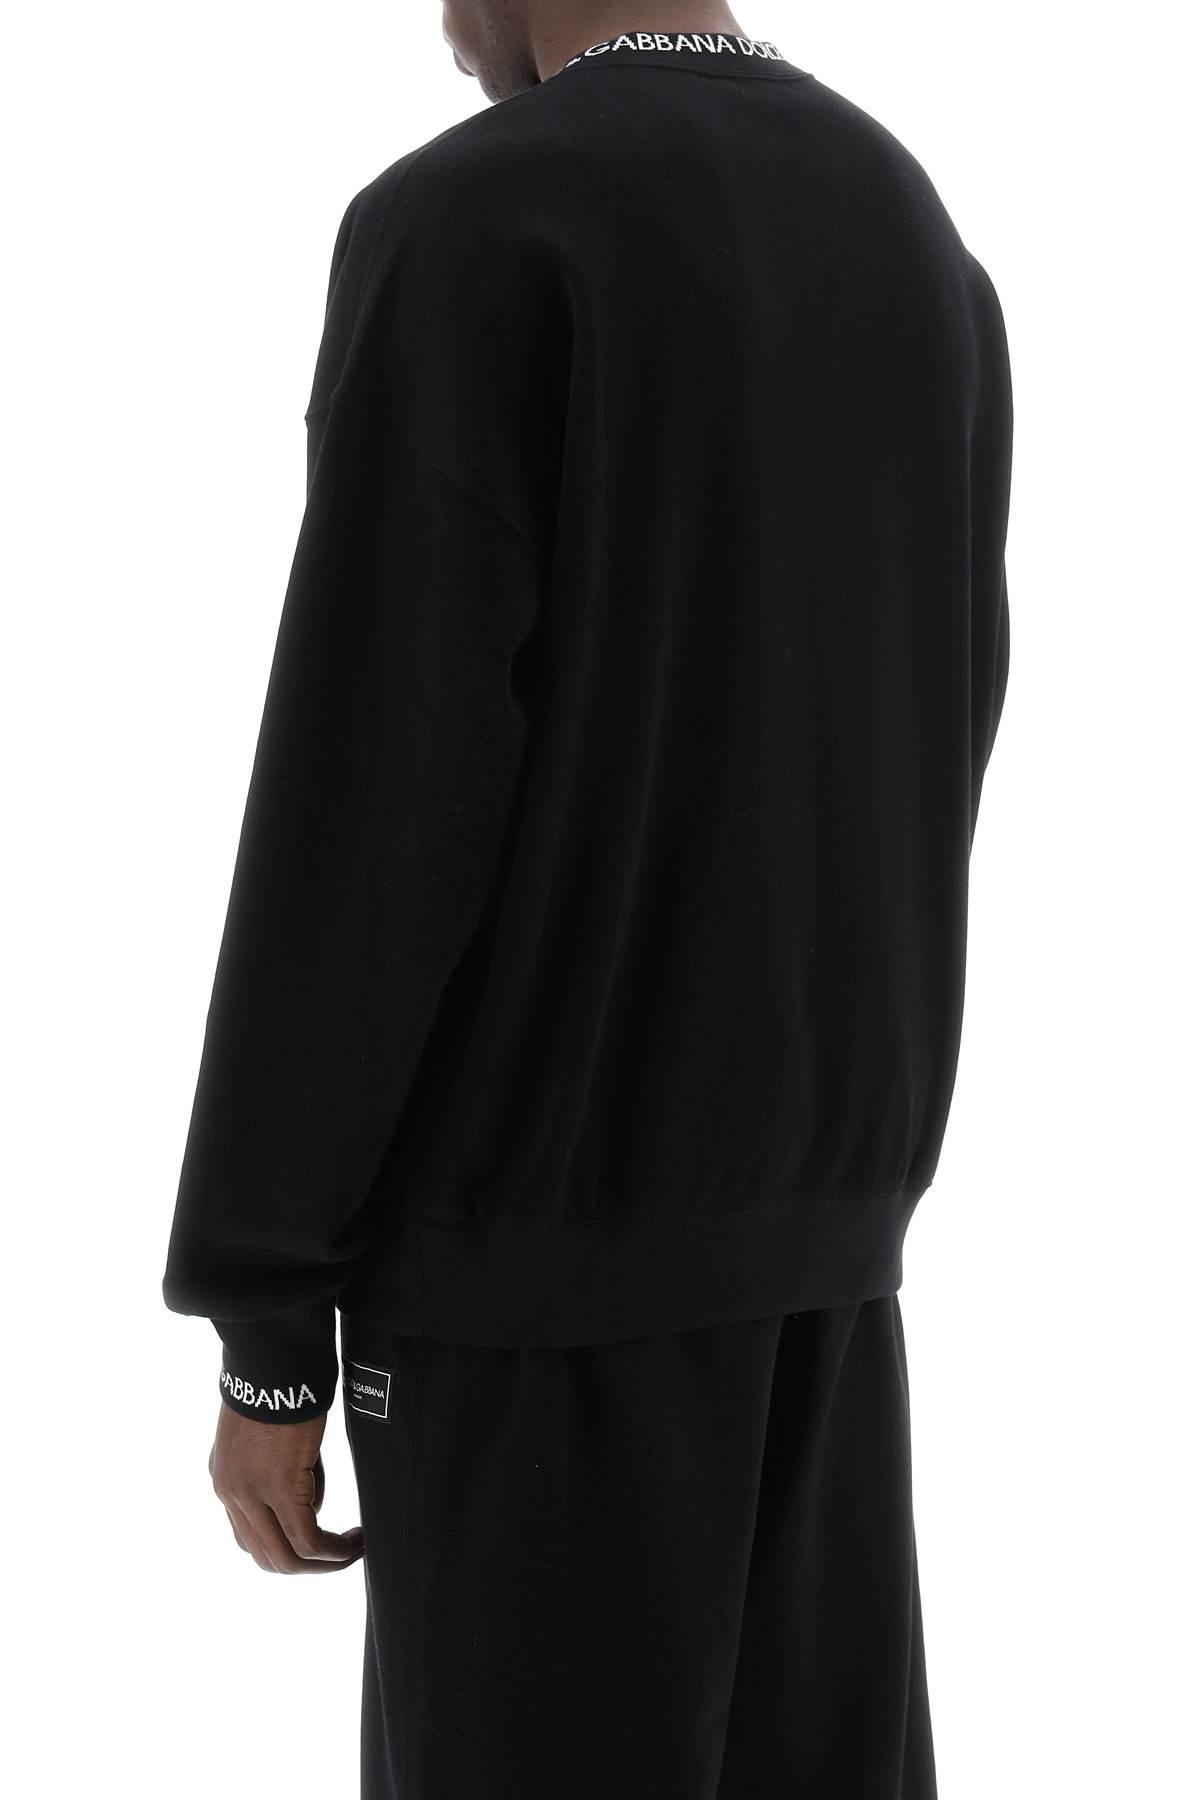 Dolce & Gabbana "Oversized Sweatshirt With - 4